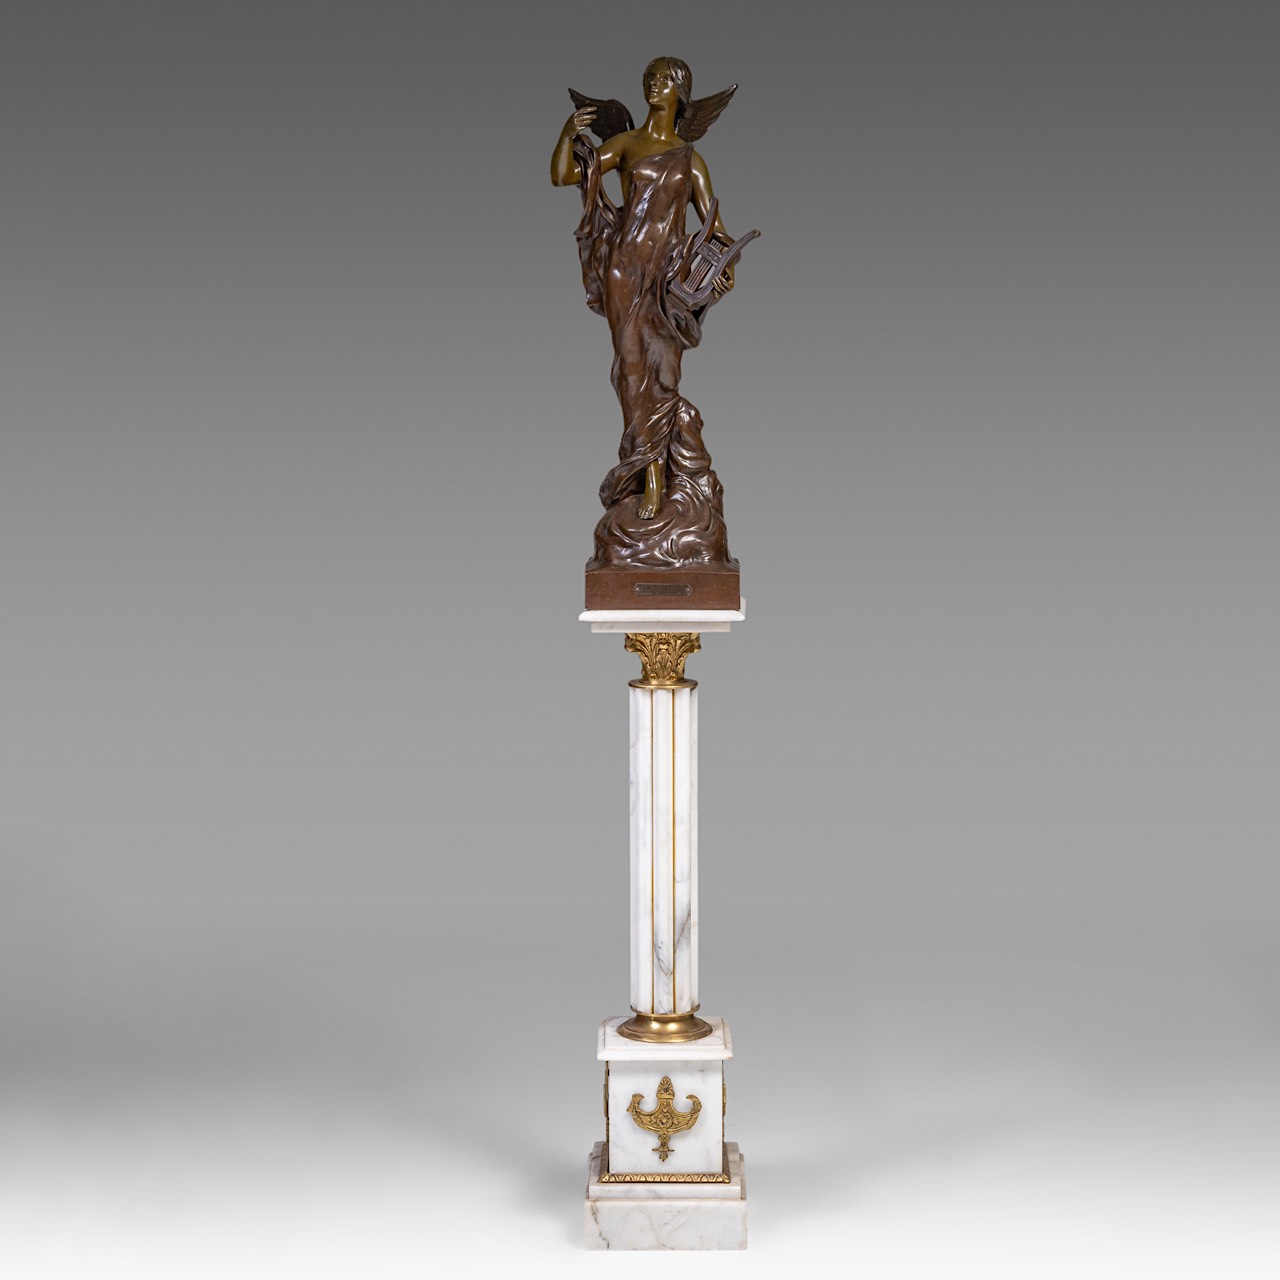 Pierre Etienne Daniel Campagne (1851-1914), 'L'inspiration', patinated bronze, H 85 cm - Image 13 of 26